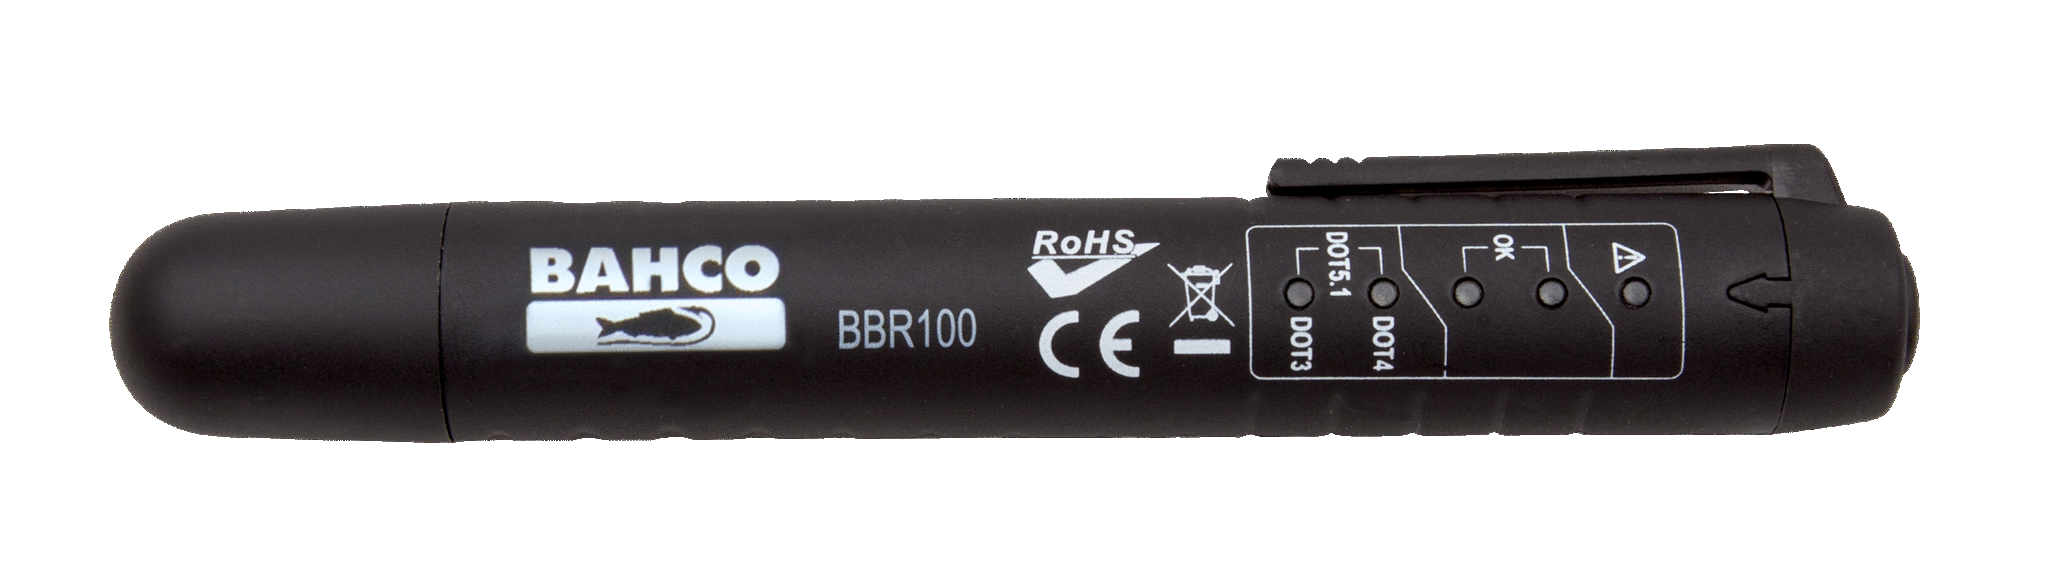 Тестер для проверки тормозной жидкости BAHCO BBR100